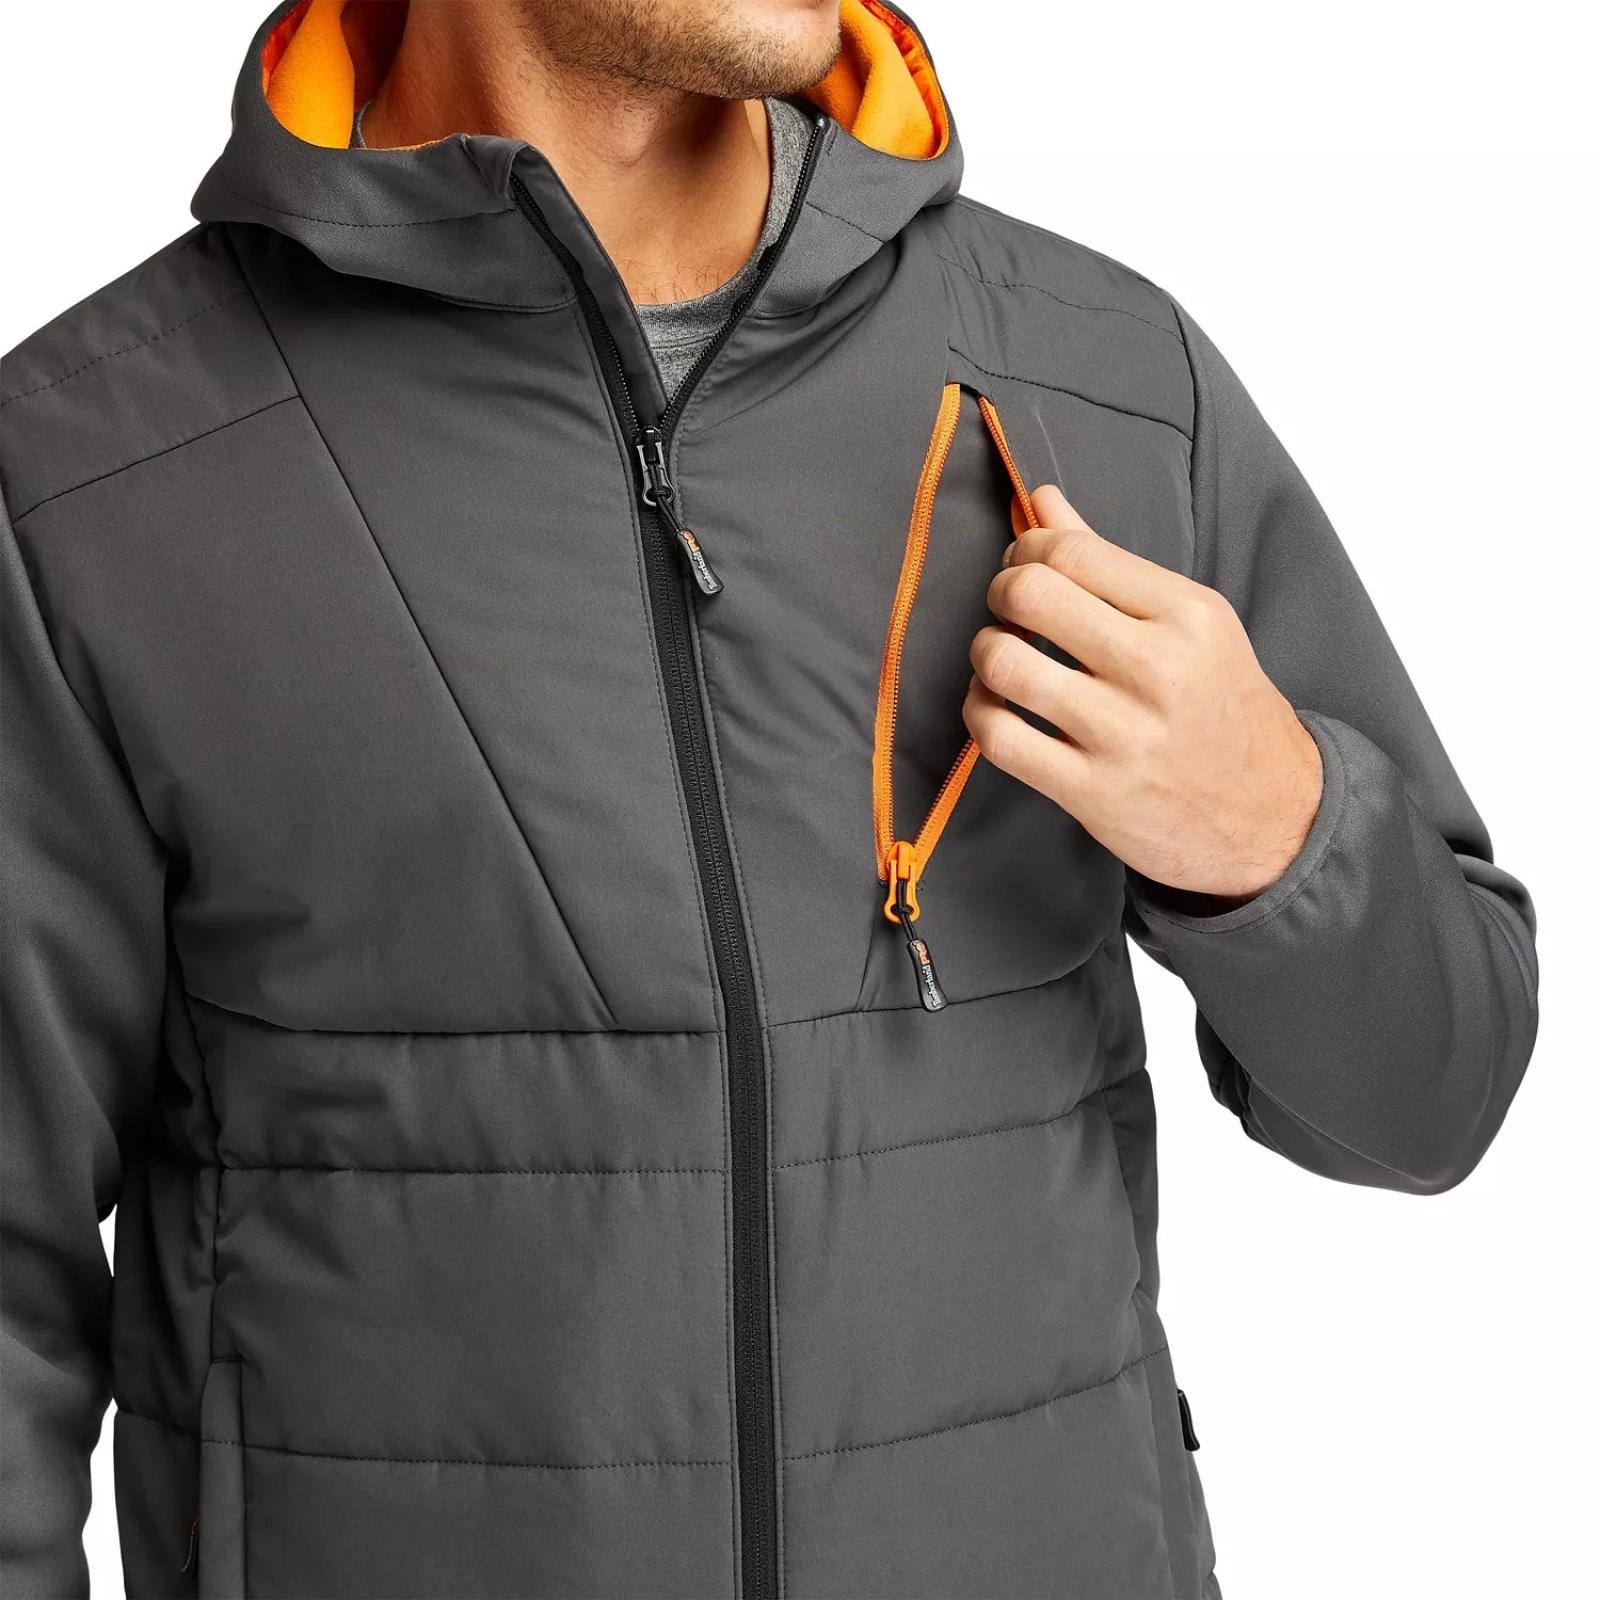 Timberland PRO Men's Deadbolt Hybrid Mid-Layer Jacket